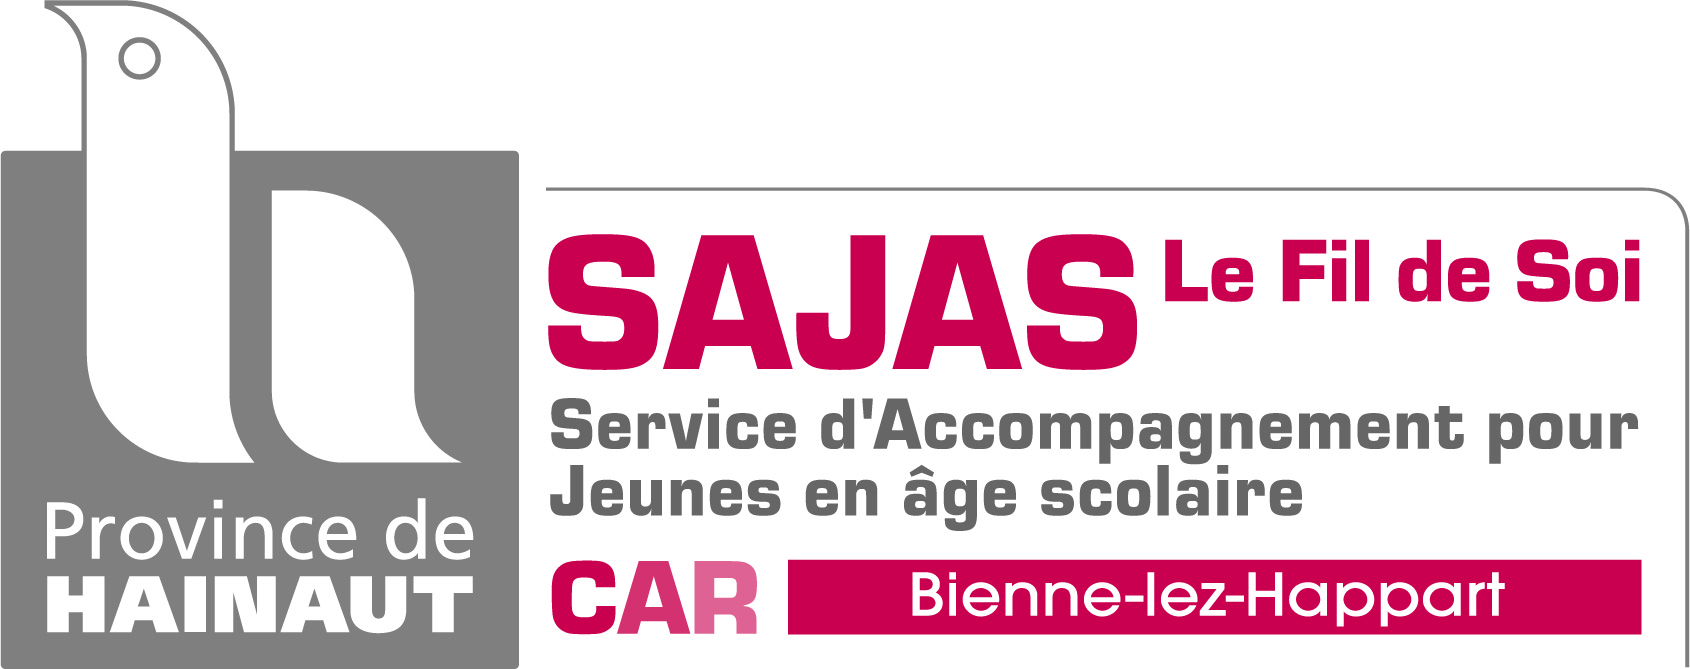 Logo du SAJAS Fil de soi à Charleroi